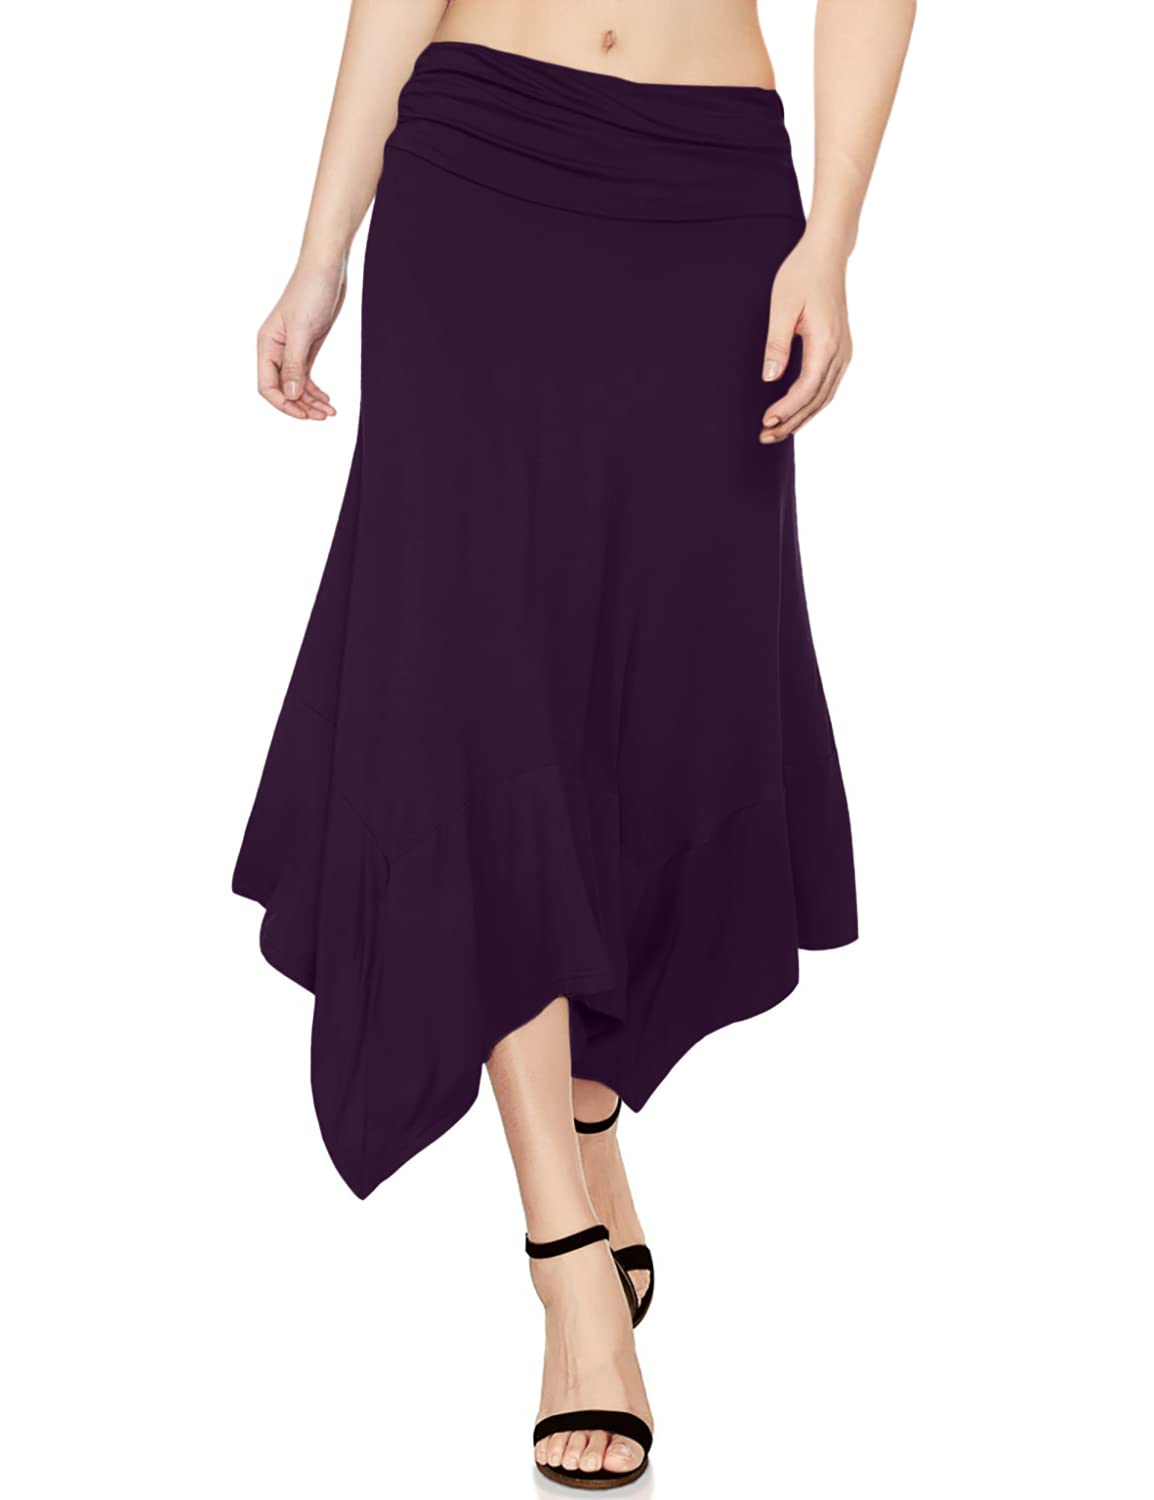 DJT Women's Purple Flowy Handkerchief Hemline Midi Skirt